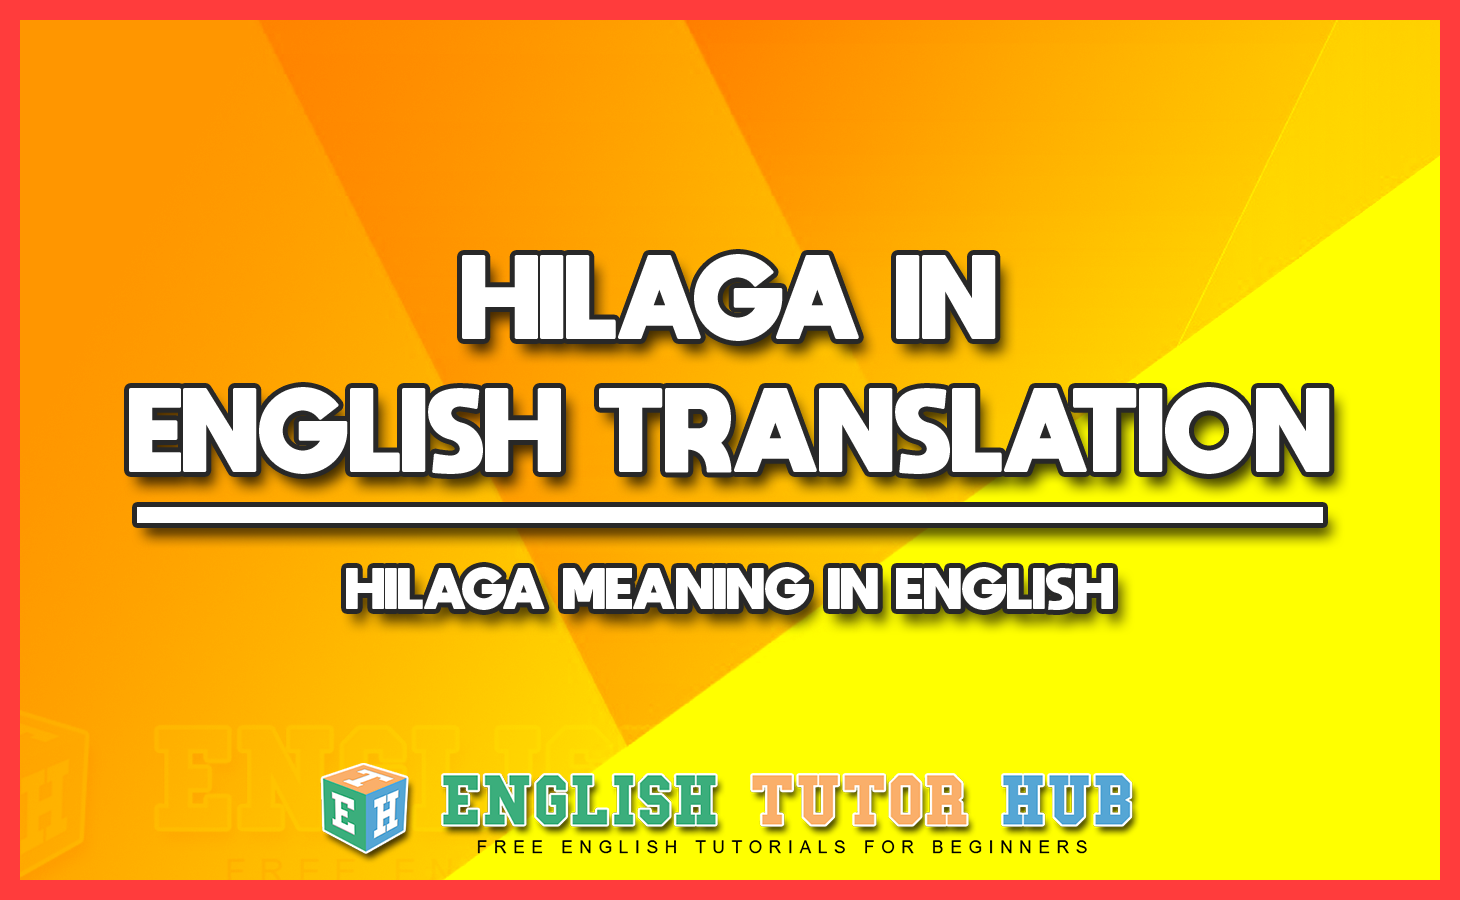 HILAGA IN ENGLISH TRANSLATION - HILAGA MEANING IN ENGLISH